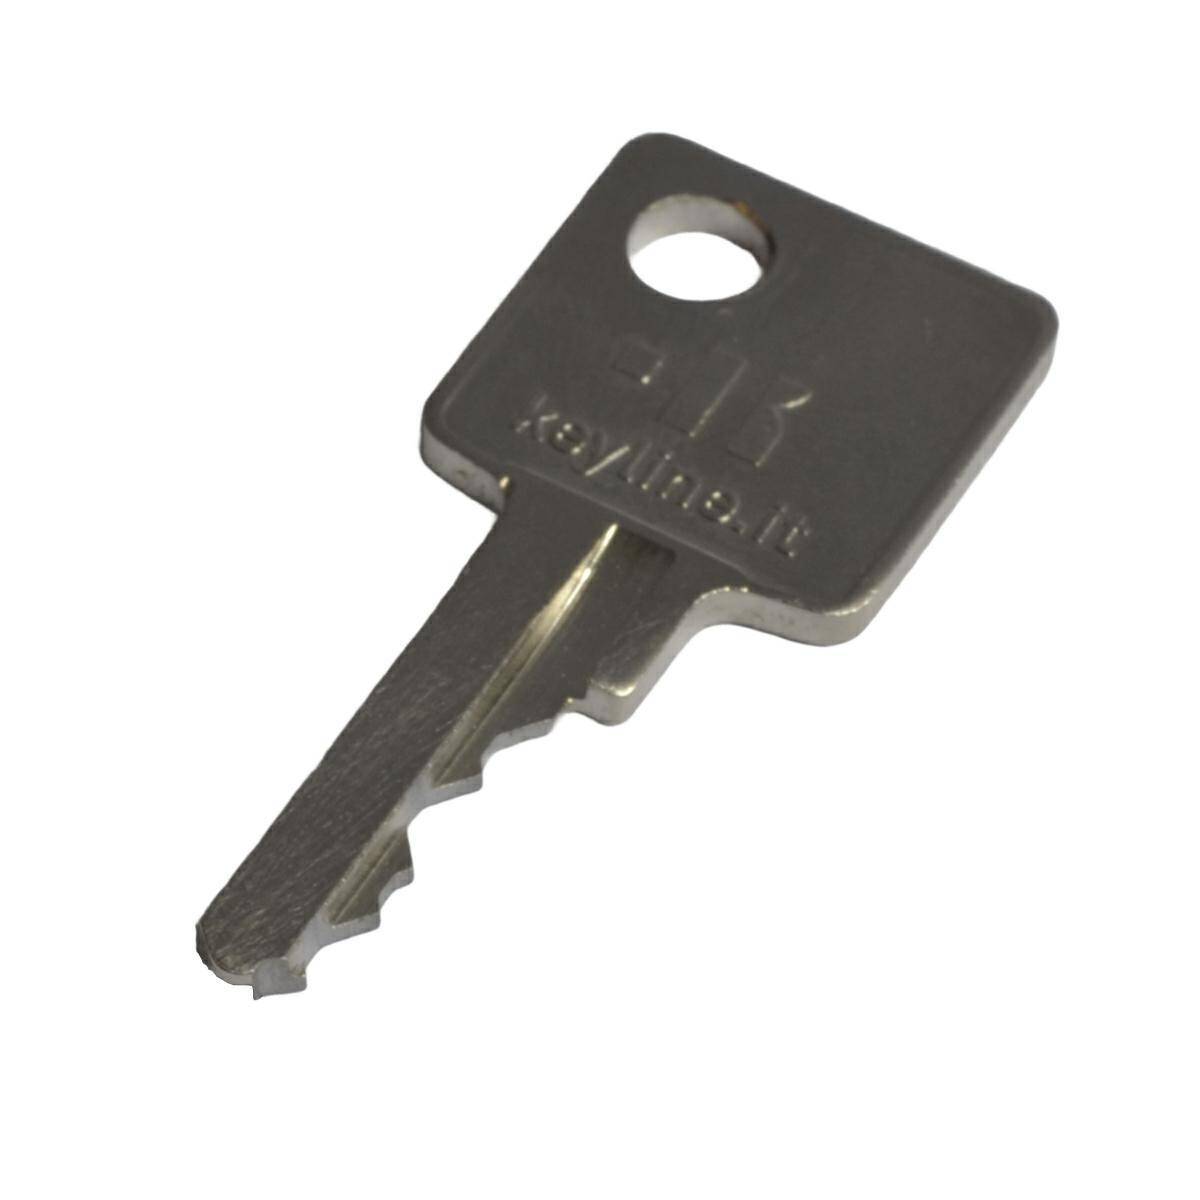 Key to unlock the drive - Beninca